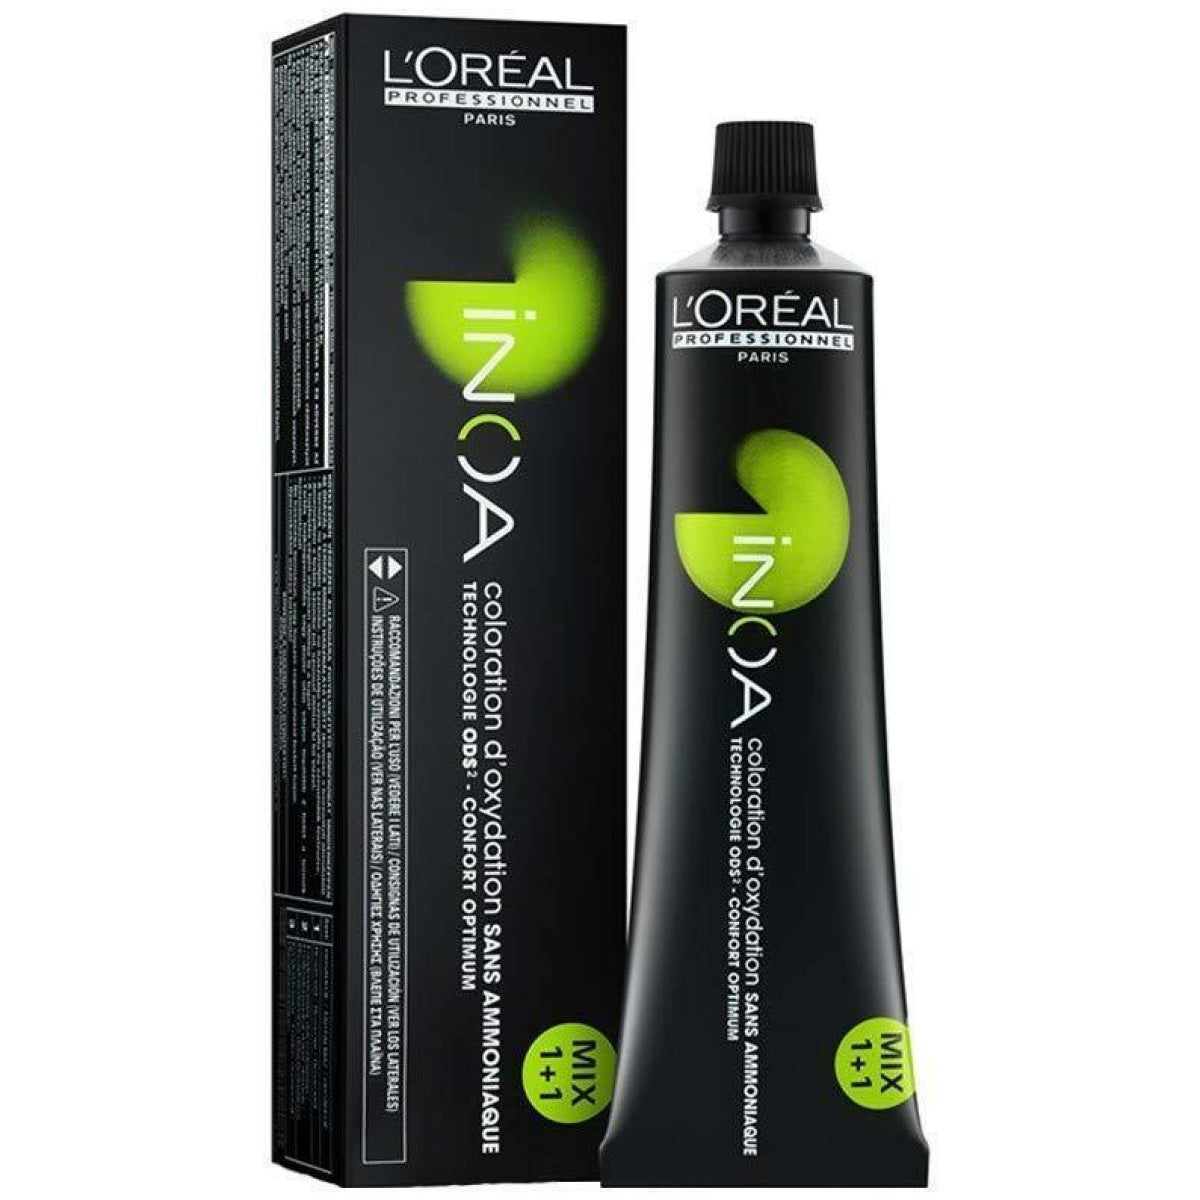 L'Oréal Inoa Hair Color 2 Darkest Brown with 100ml Developer & brush